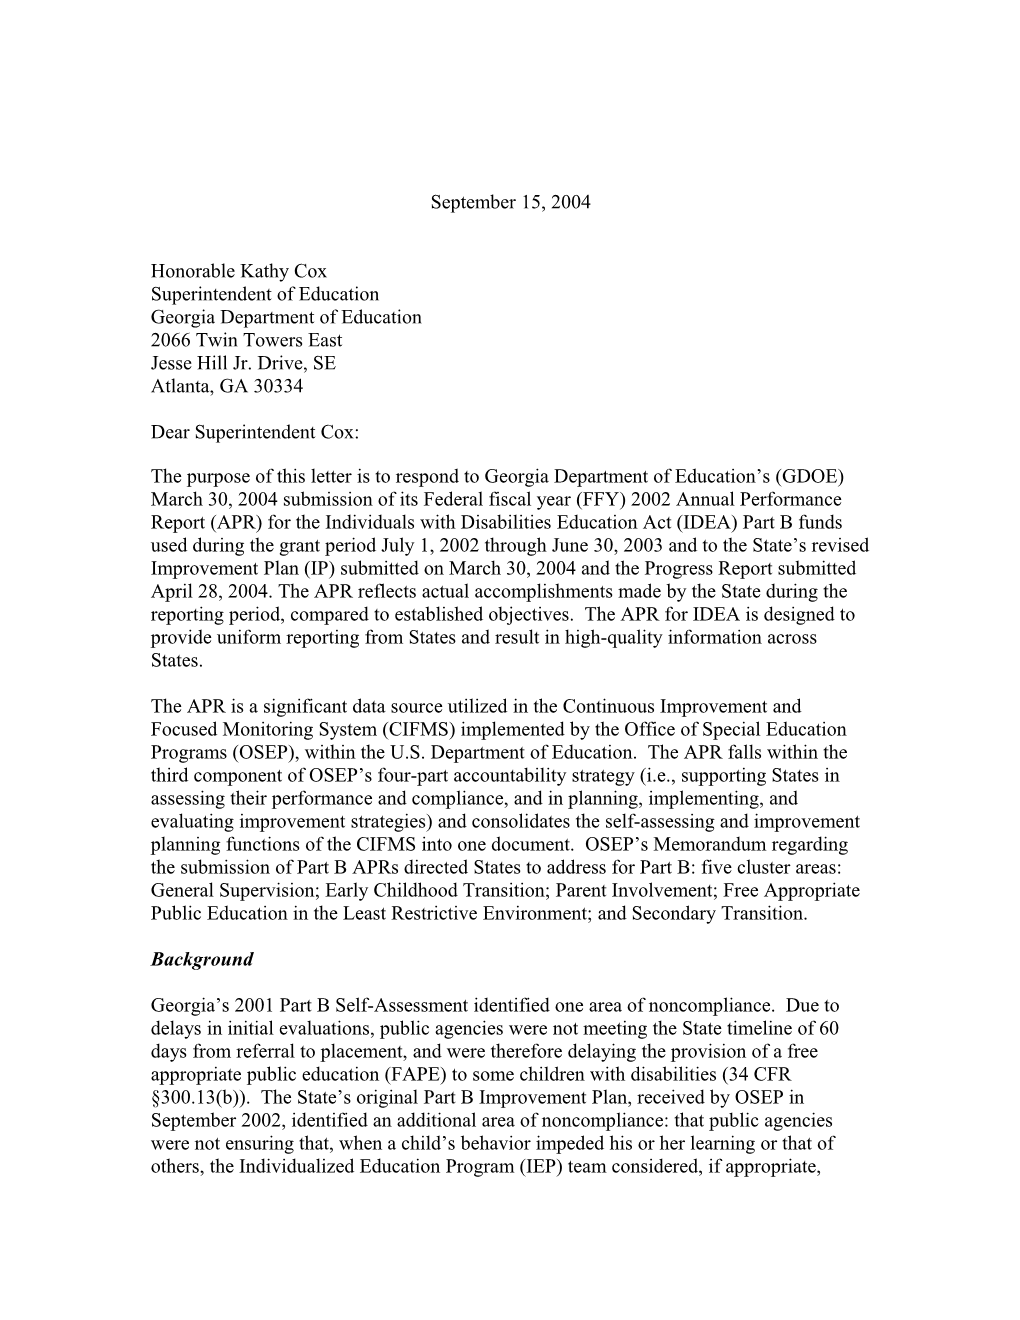 Georgia Part B APR Letter, 2002-2003 (MS Word)